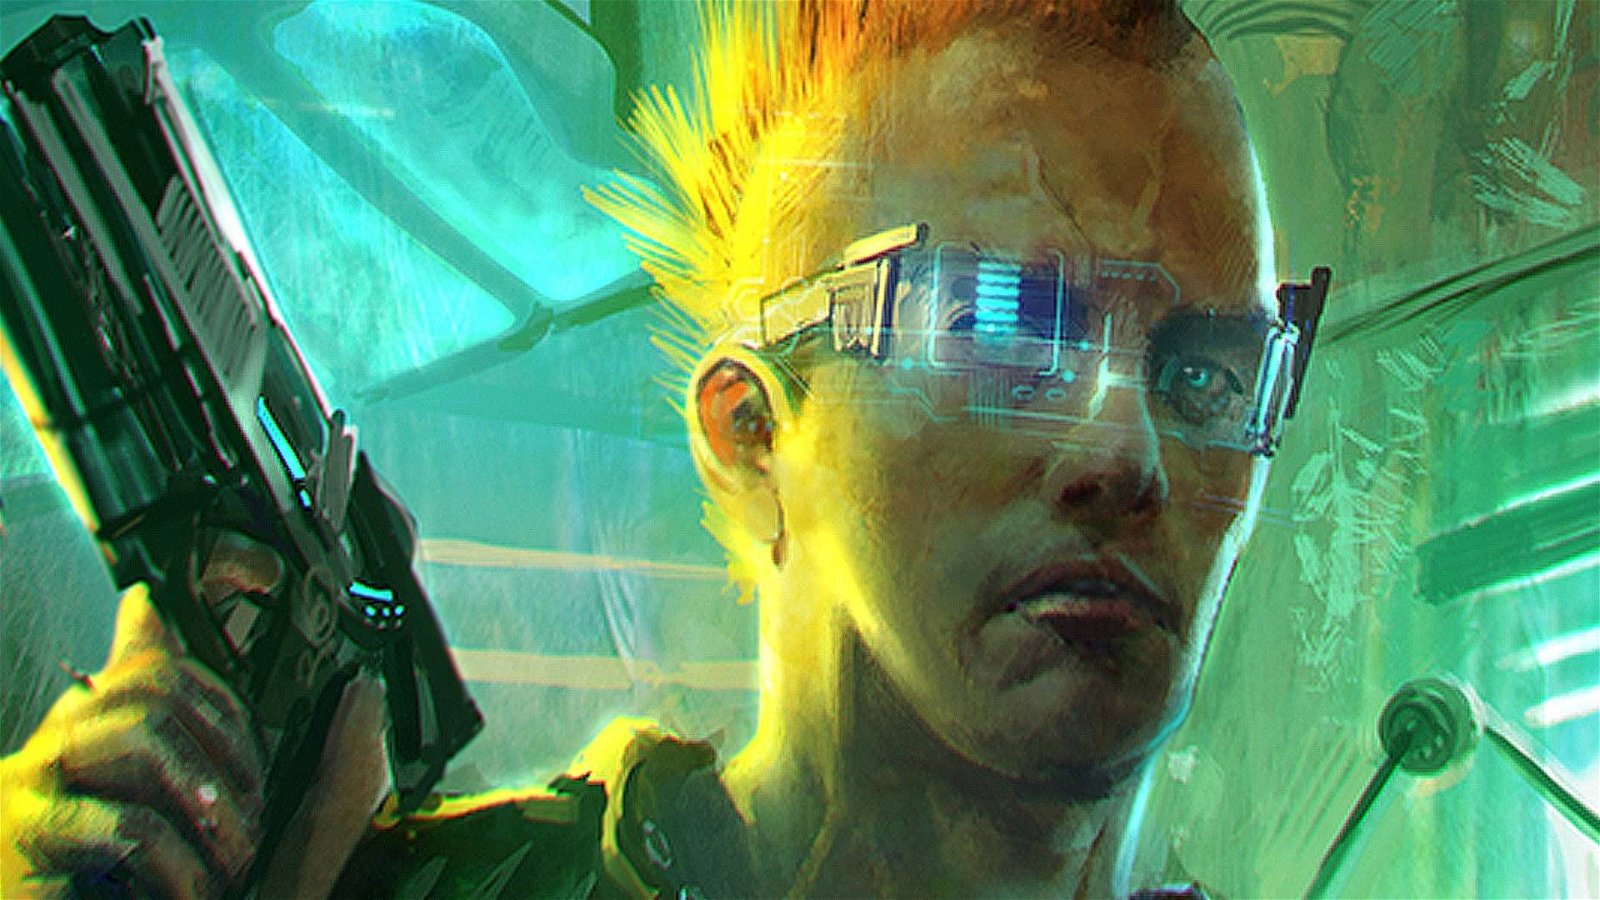 Immagine di Il creatore di Cyberpunk vede i suoi incubi diventare realtà